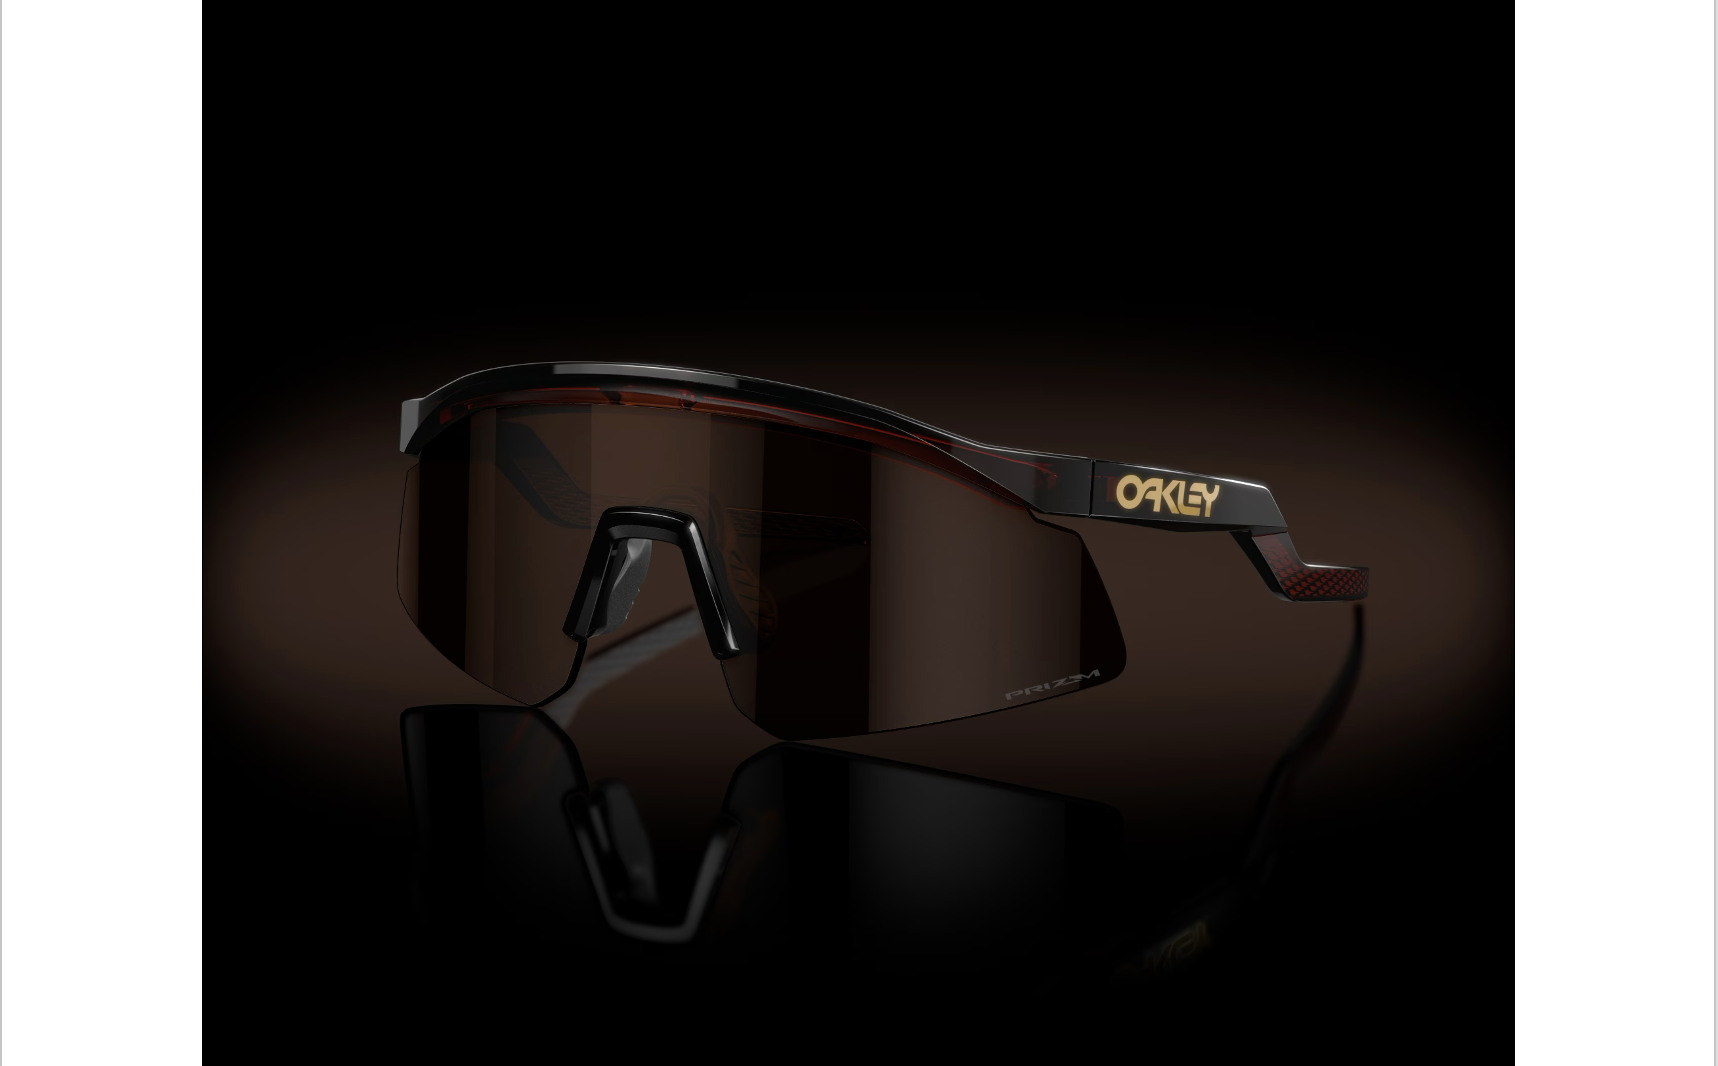 Oakley Hydra Sunglasses